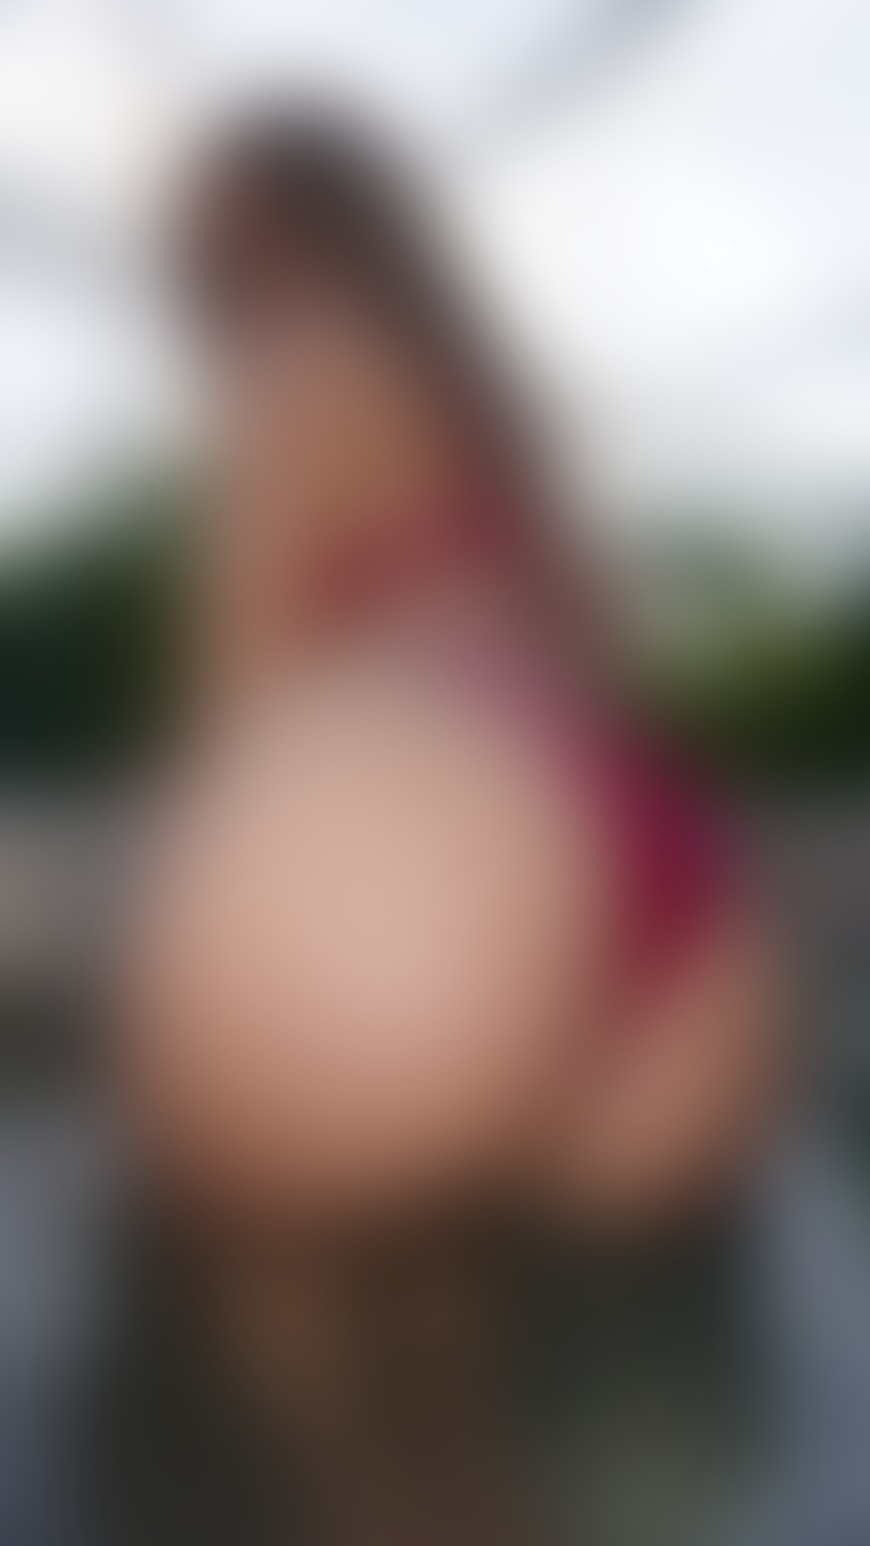 Ass or boobs baby? 😳 - post hidden image